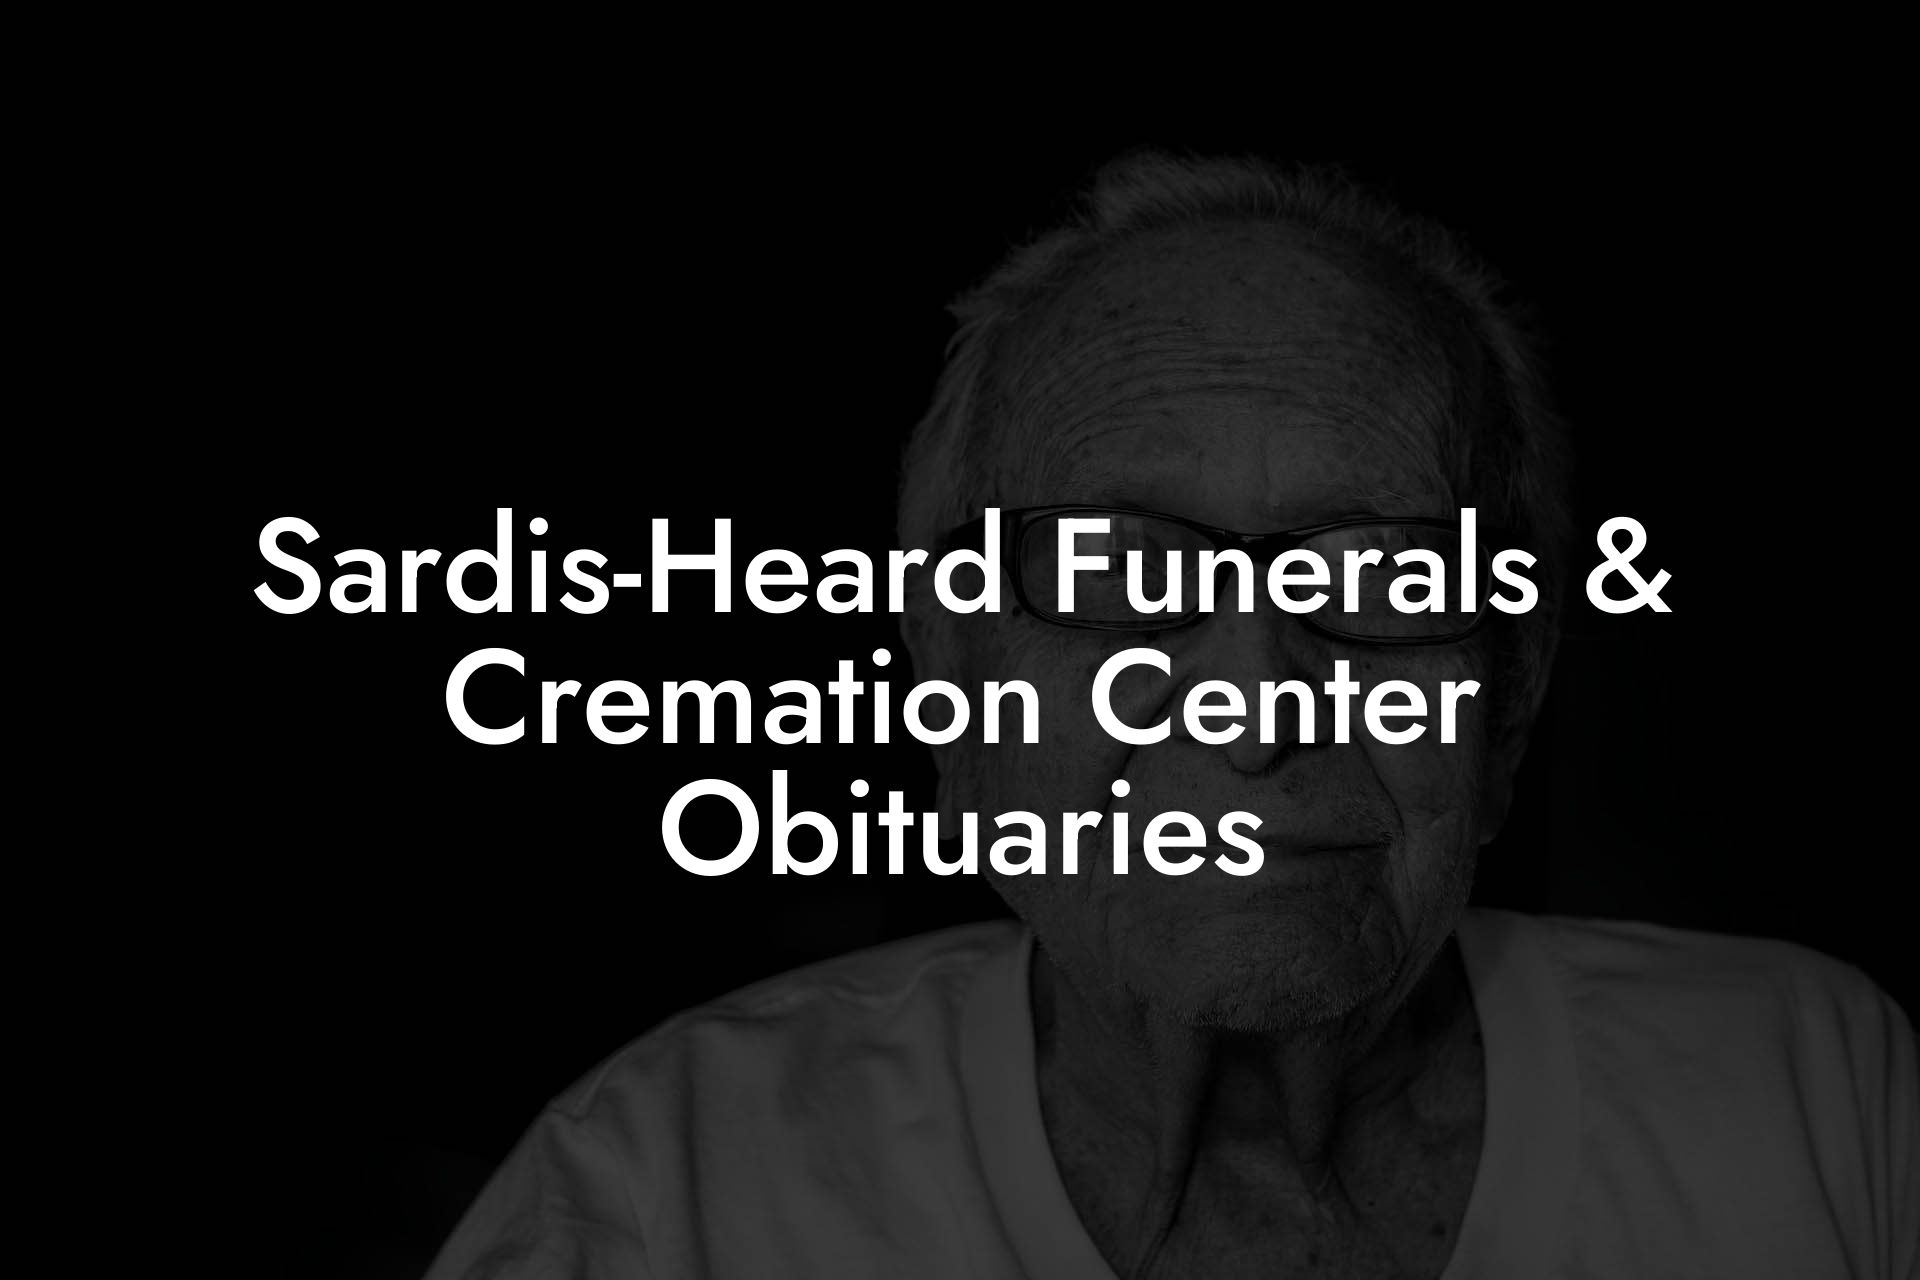 Sardis-Heard Funerals & Cremation Center Obituaries